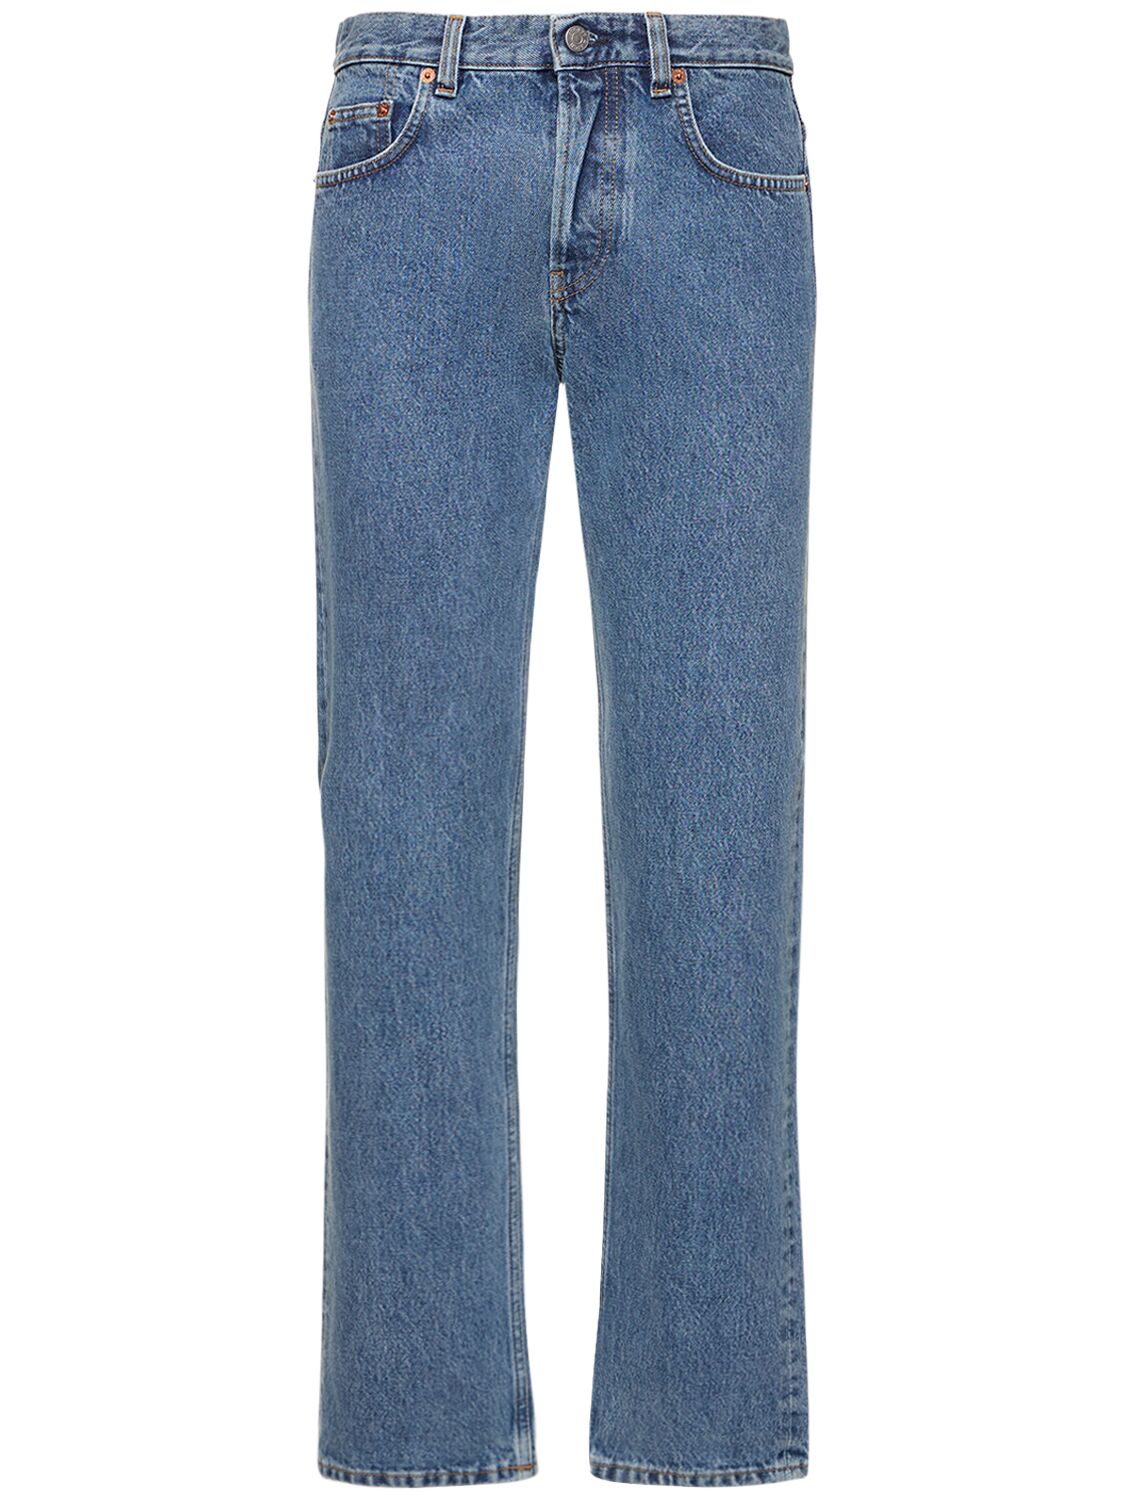 Shop Sporty And Rich Vintage Fit Denim Jeans In Light Blue